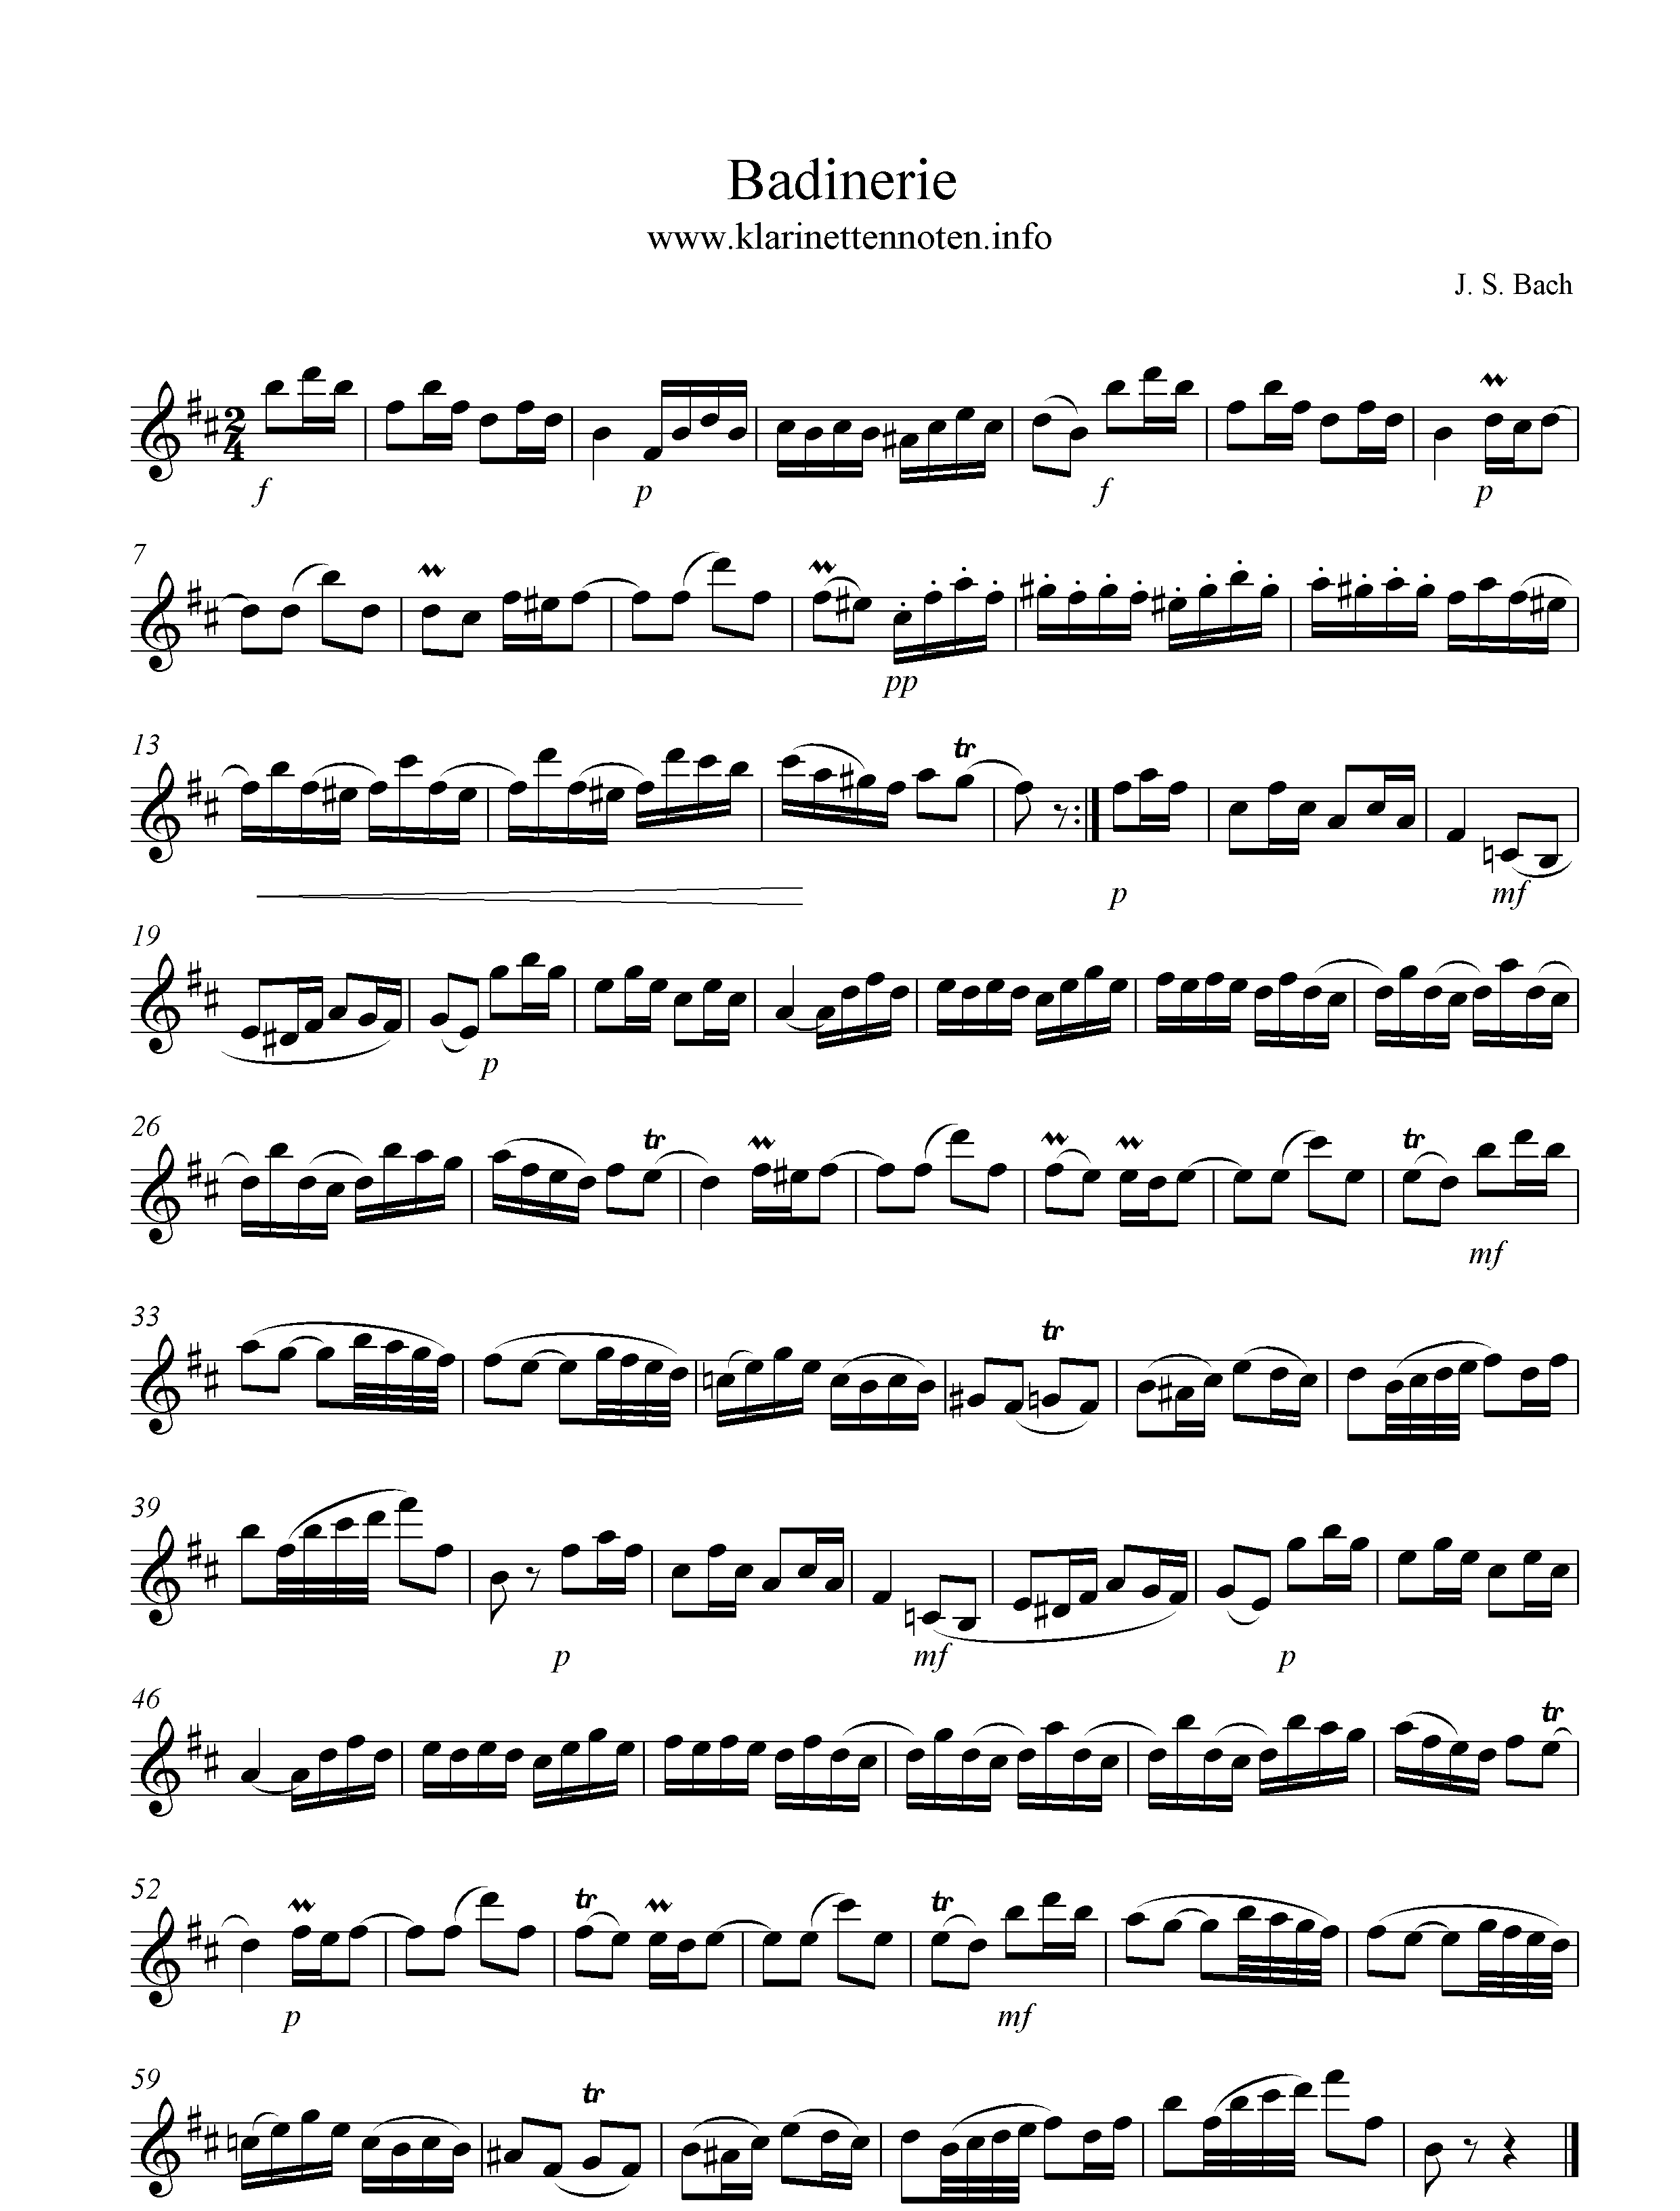 Bach - Badinerie, Clarinet, klarinette, h-moll, b-minor, Noten, freesheeetmusic